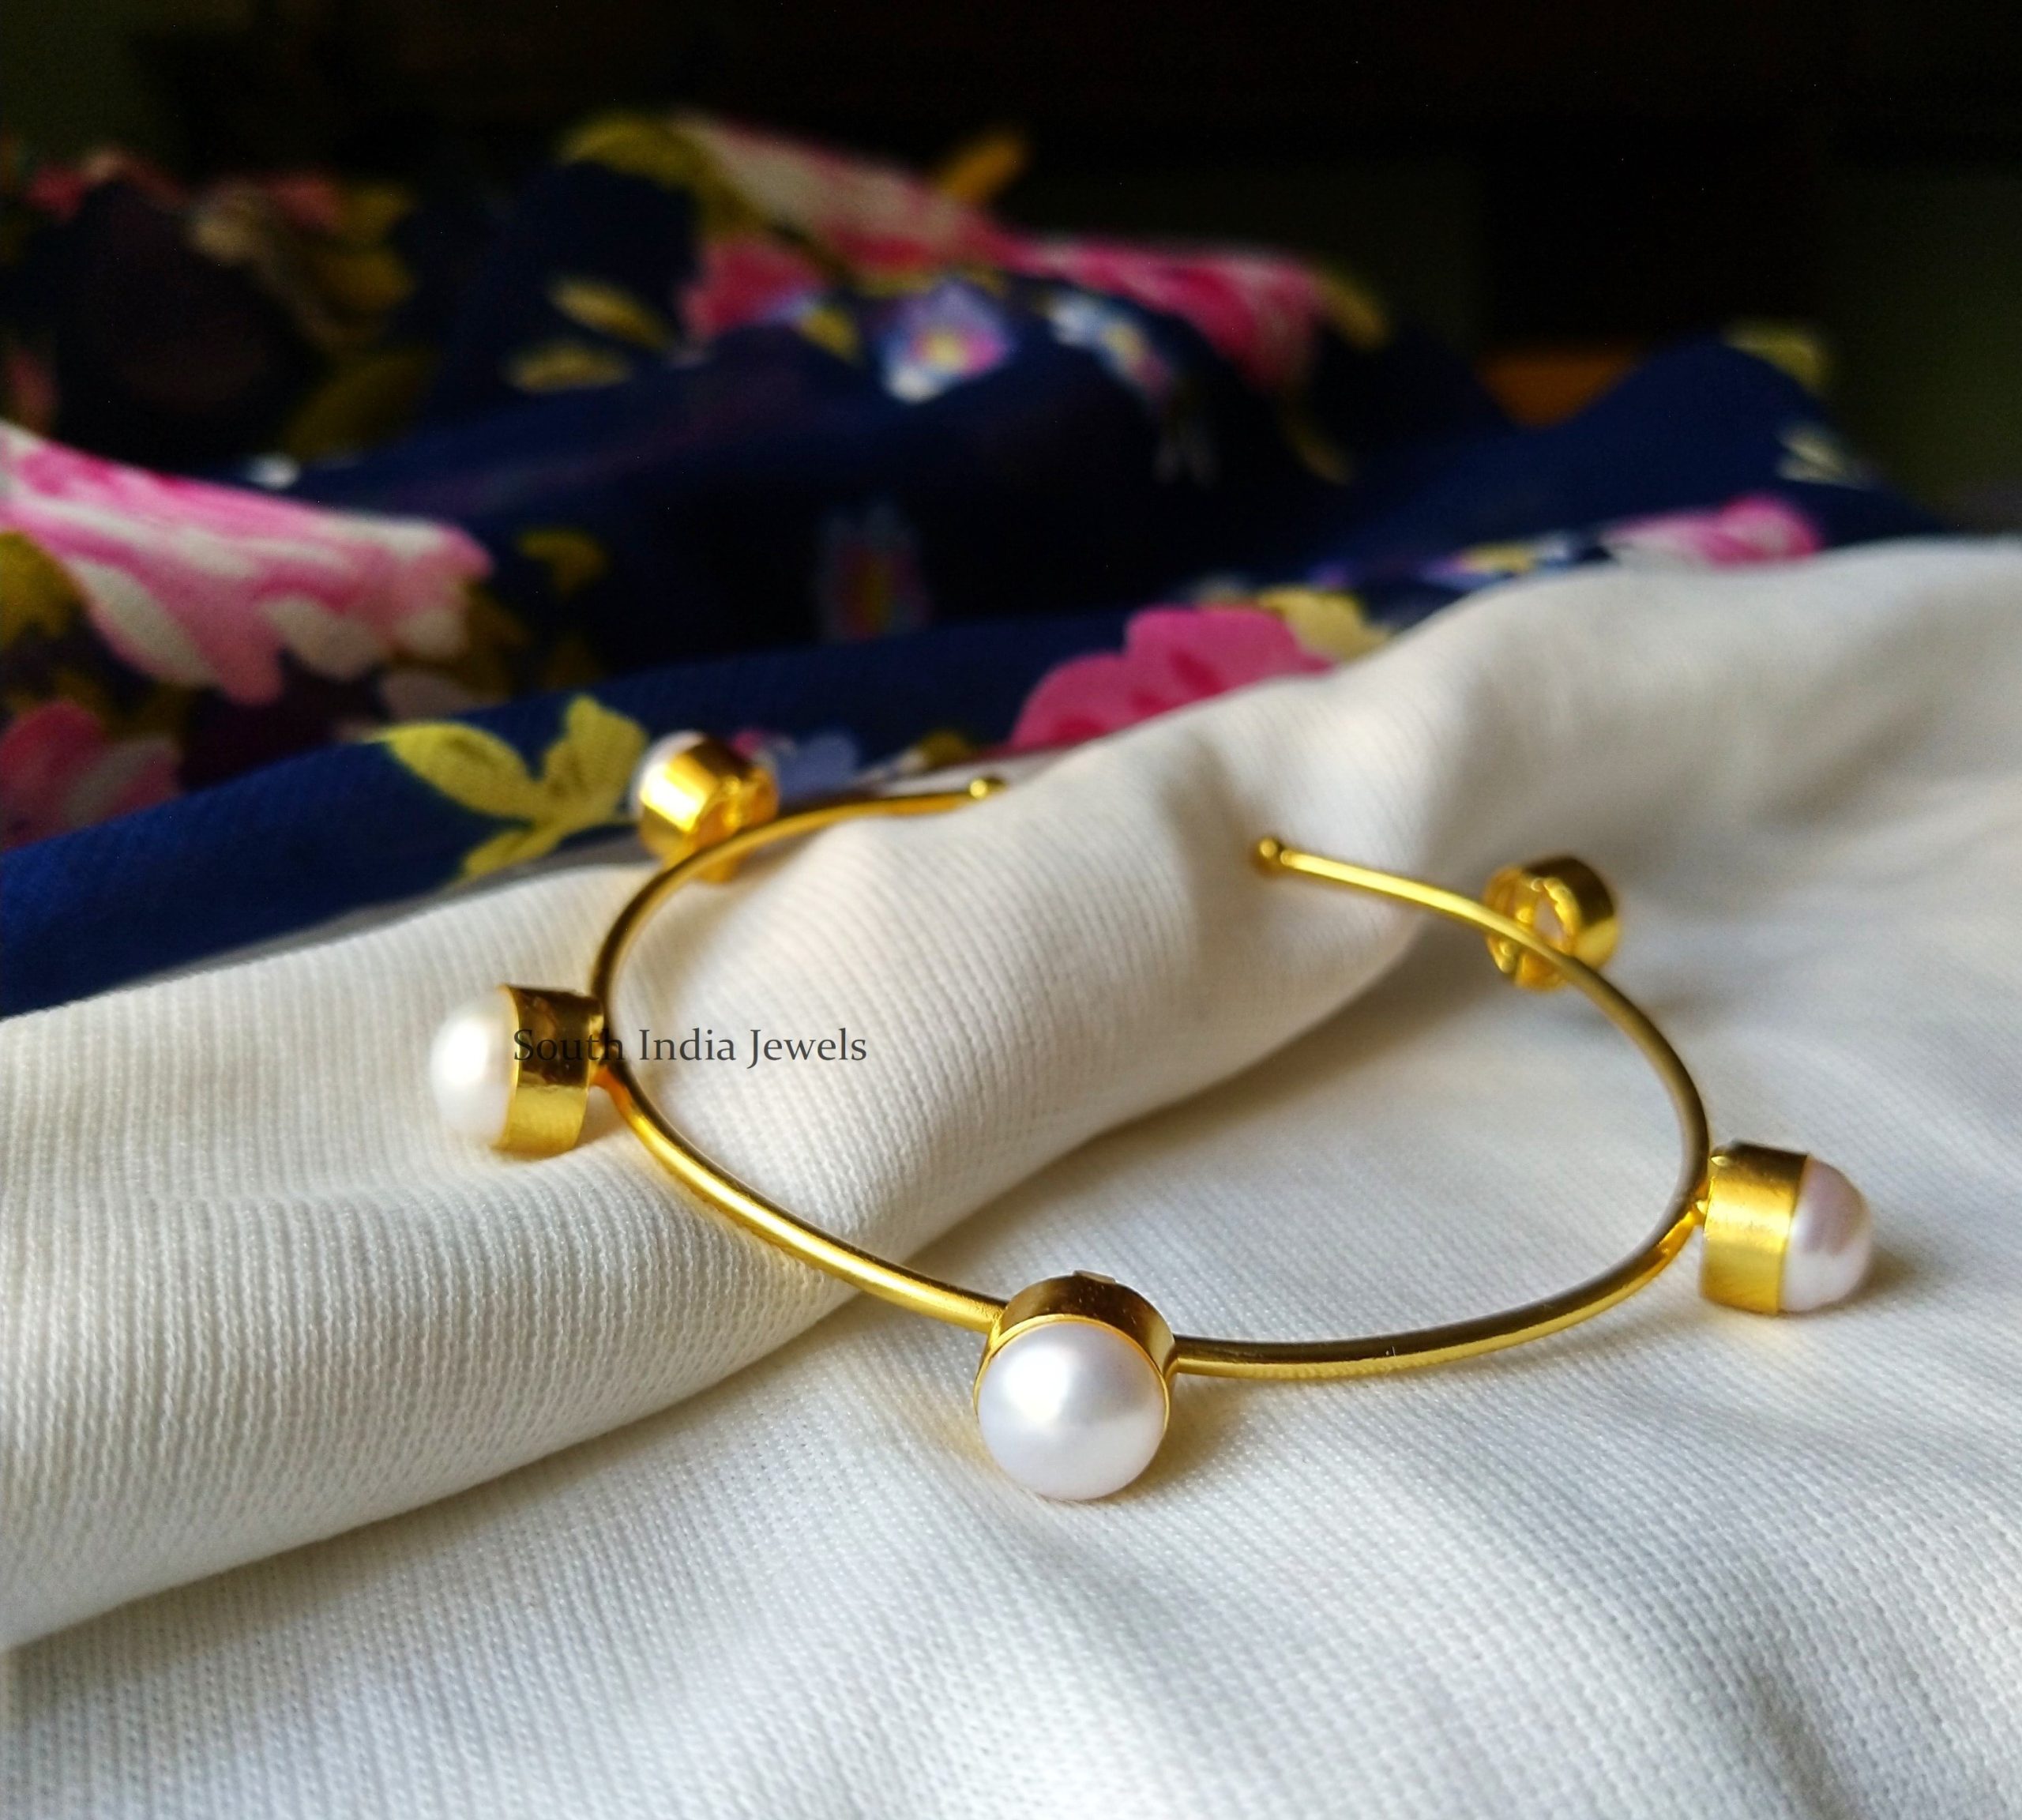 Beautiful Pearl Bracelet